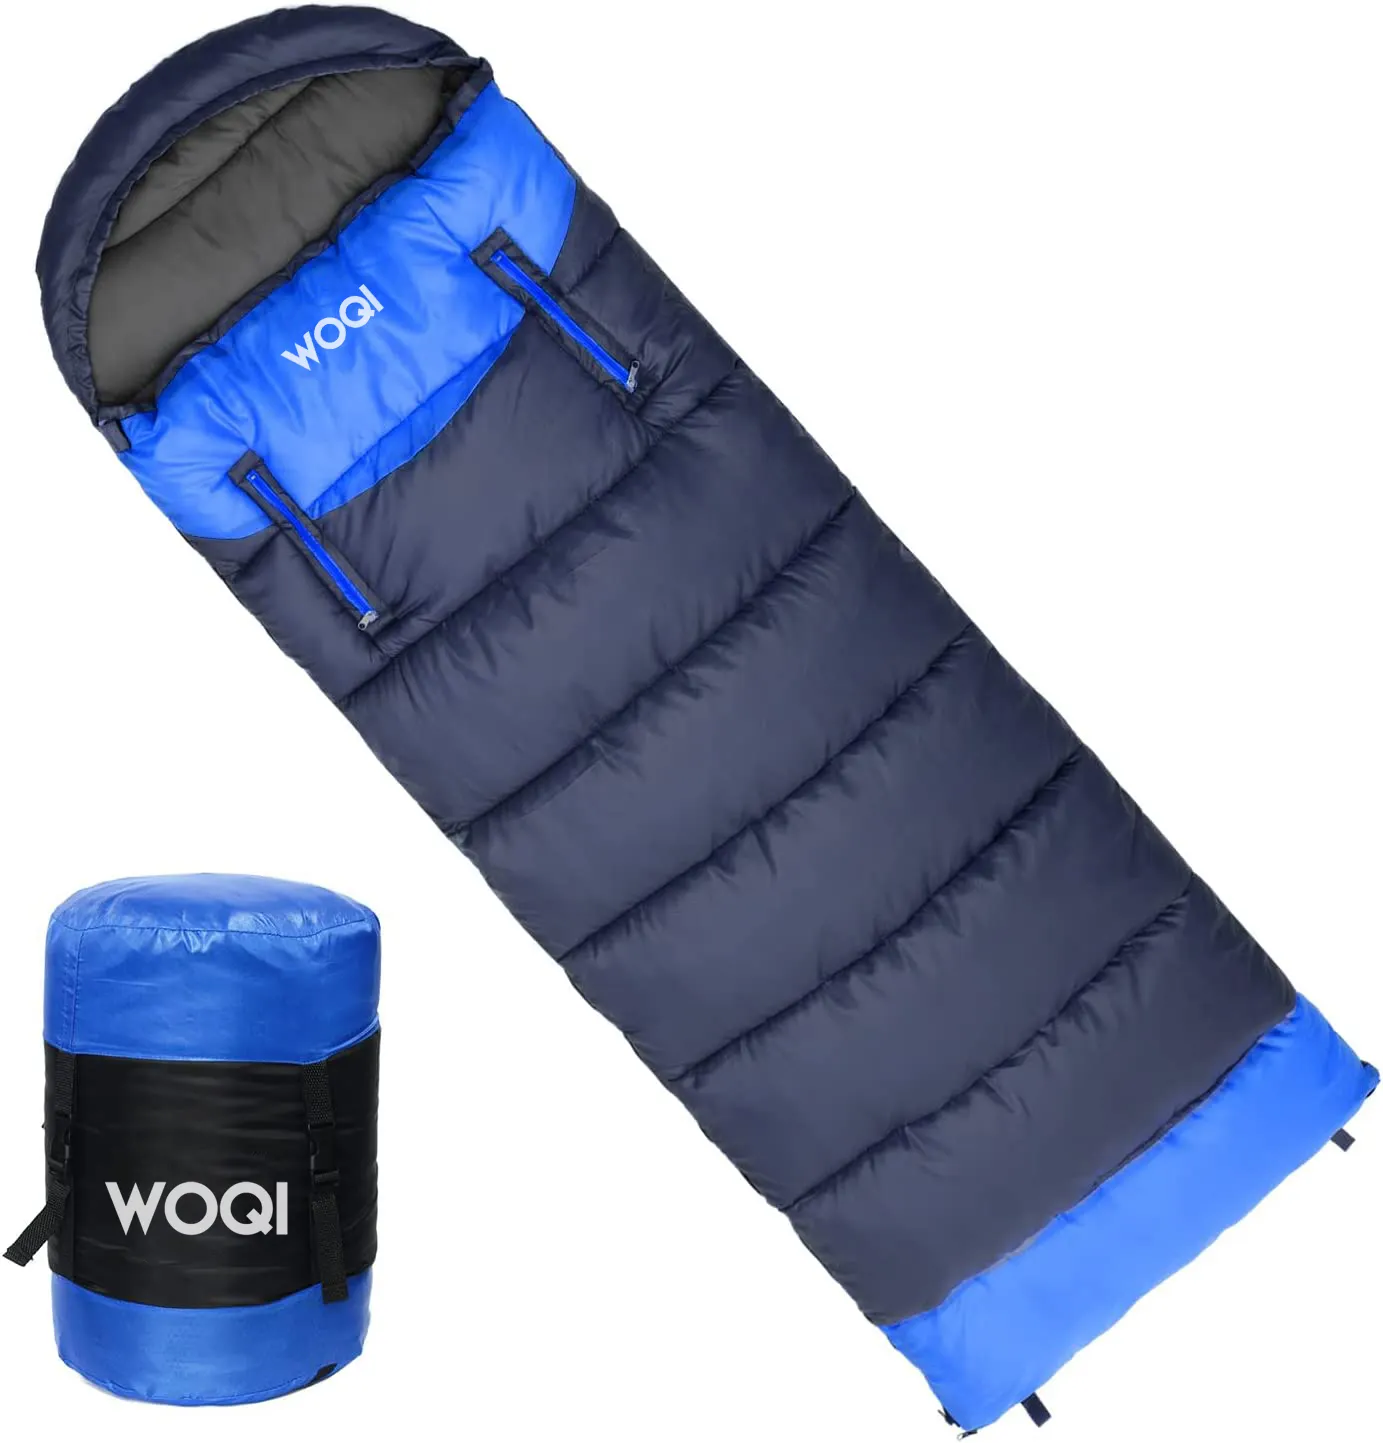 Woqi Sport Portable Ultralight Top Rated Double 3 Season Sleep Bag Custom Compact Sleeping Bag Cotton